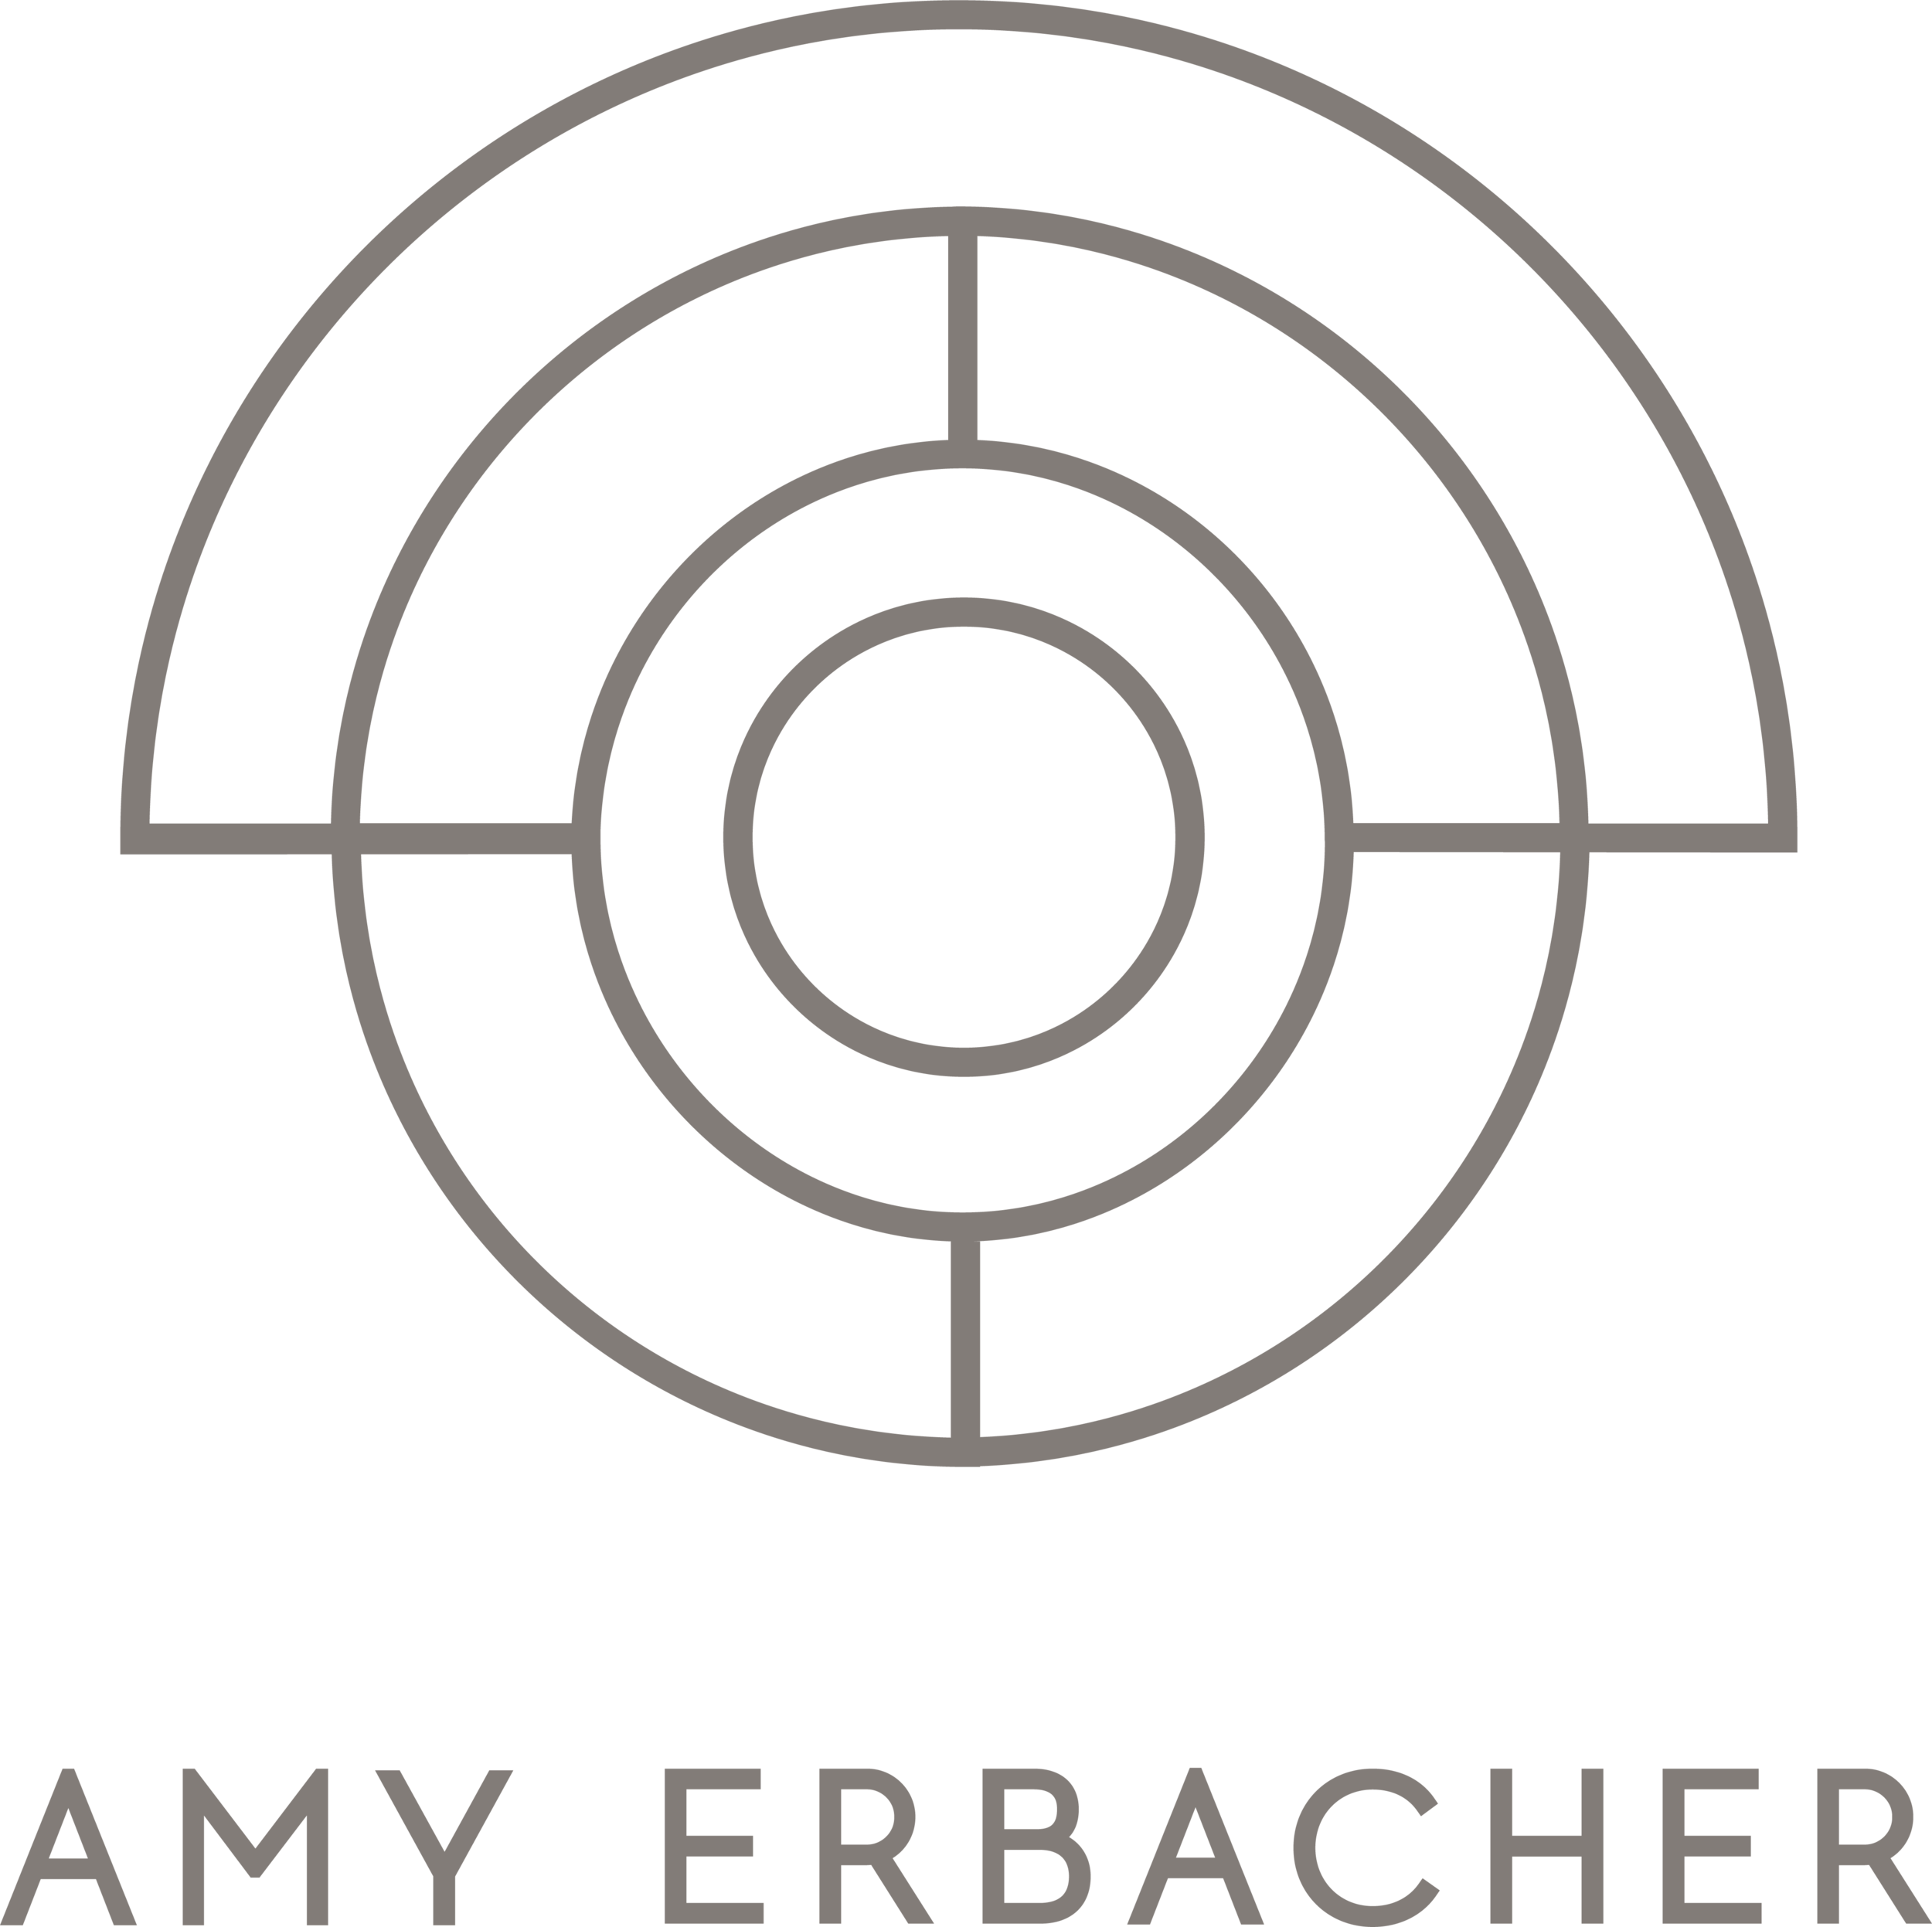 Amy Erbacher